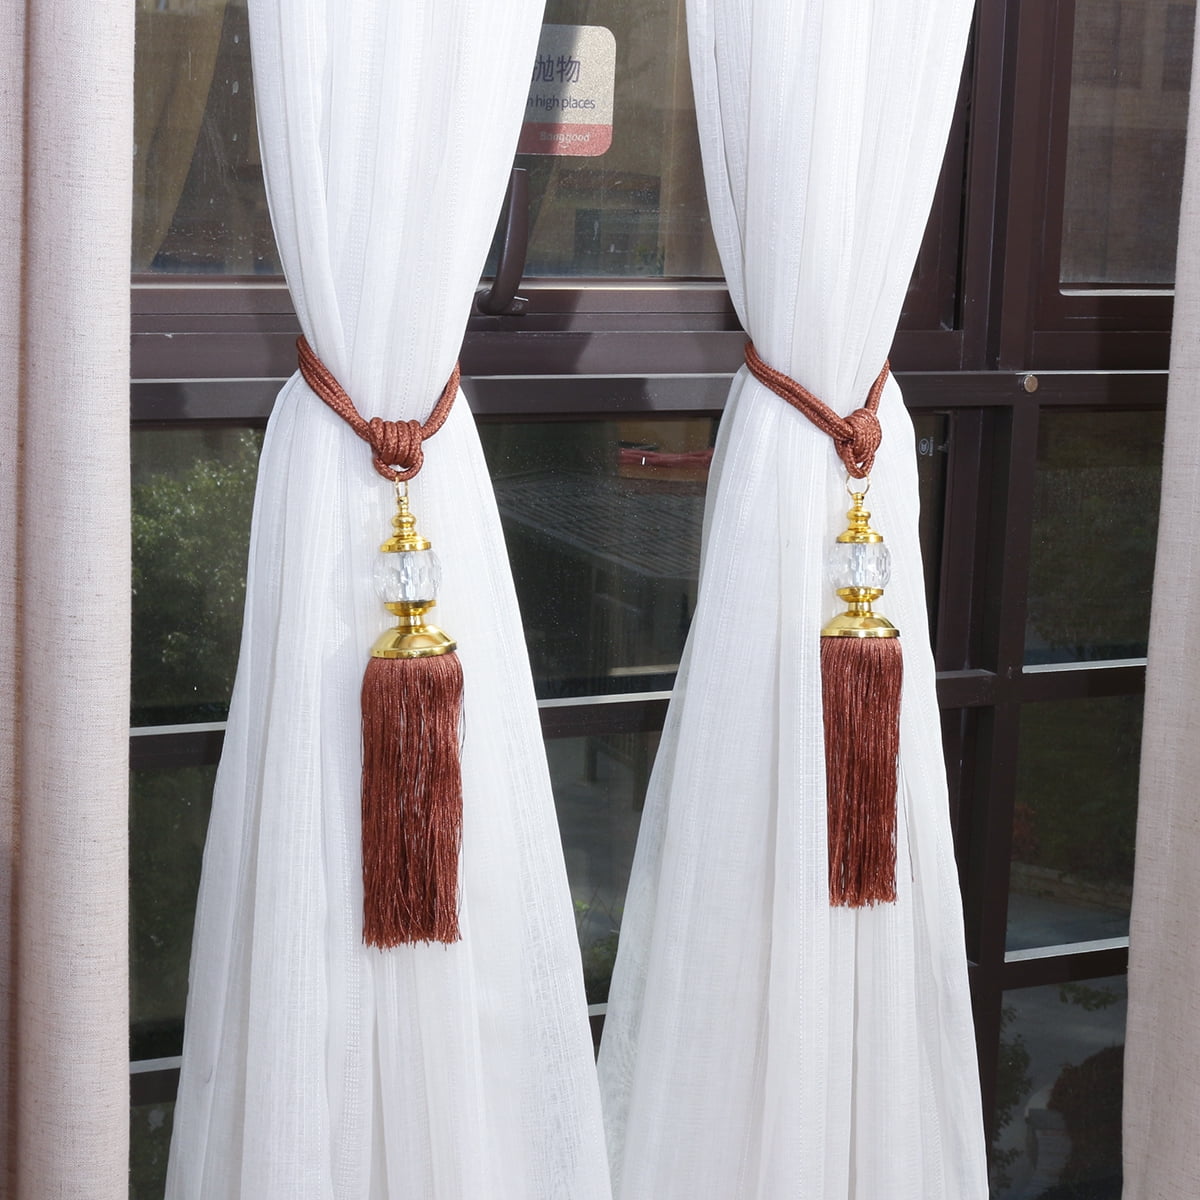 1 Pair Beaded Tassels Tieback Curtain Cord Home Window Treatments Choose color 